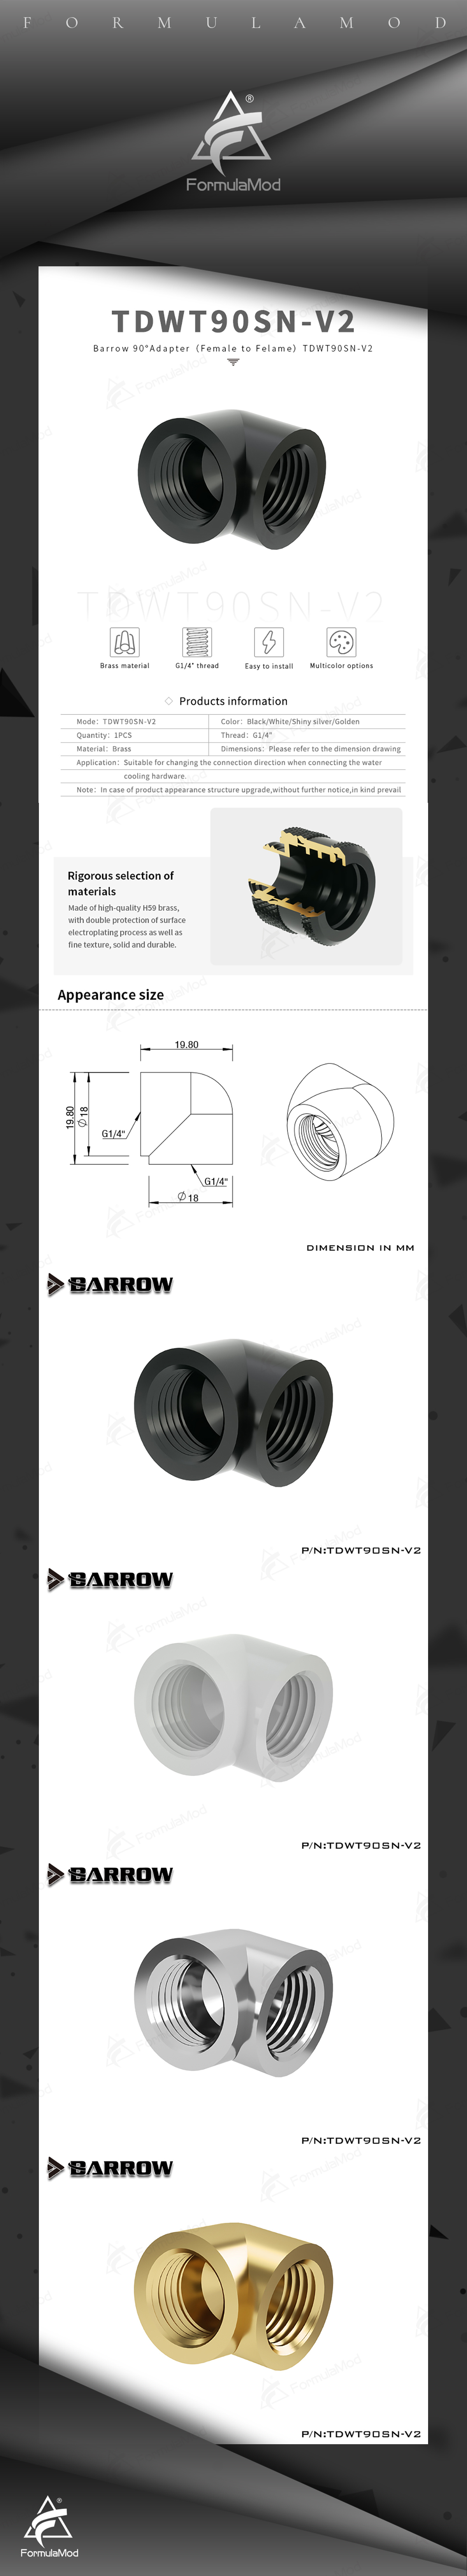 Barrow Double Internal G1/4'' Thread 90 Degree Fitting Adapter Water Cooling Adaptors Water Cooling Fitting, TDWT90SN-V2  